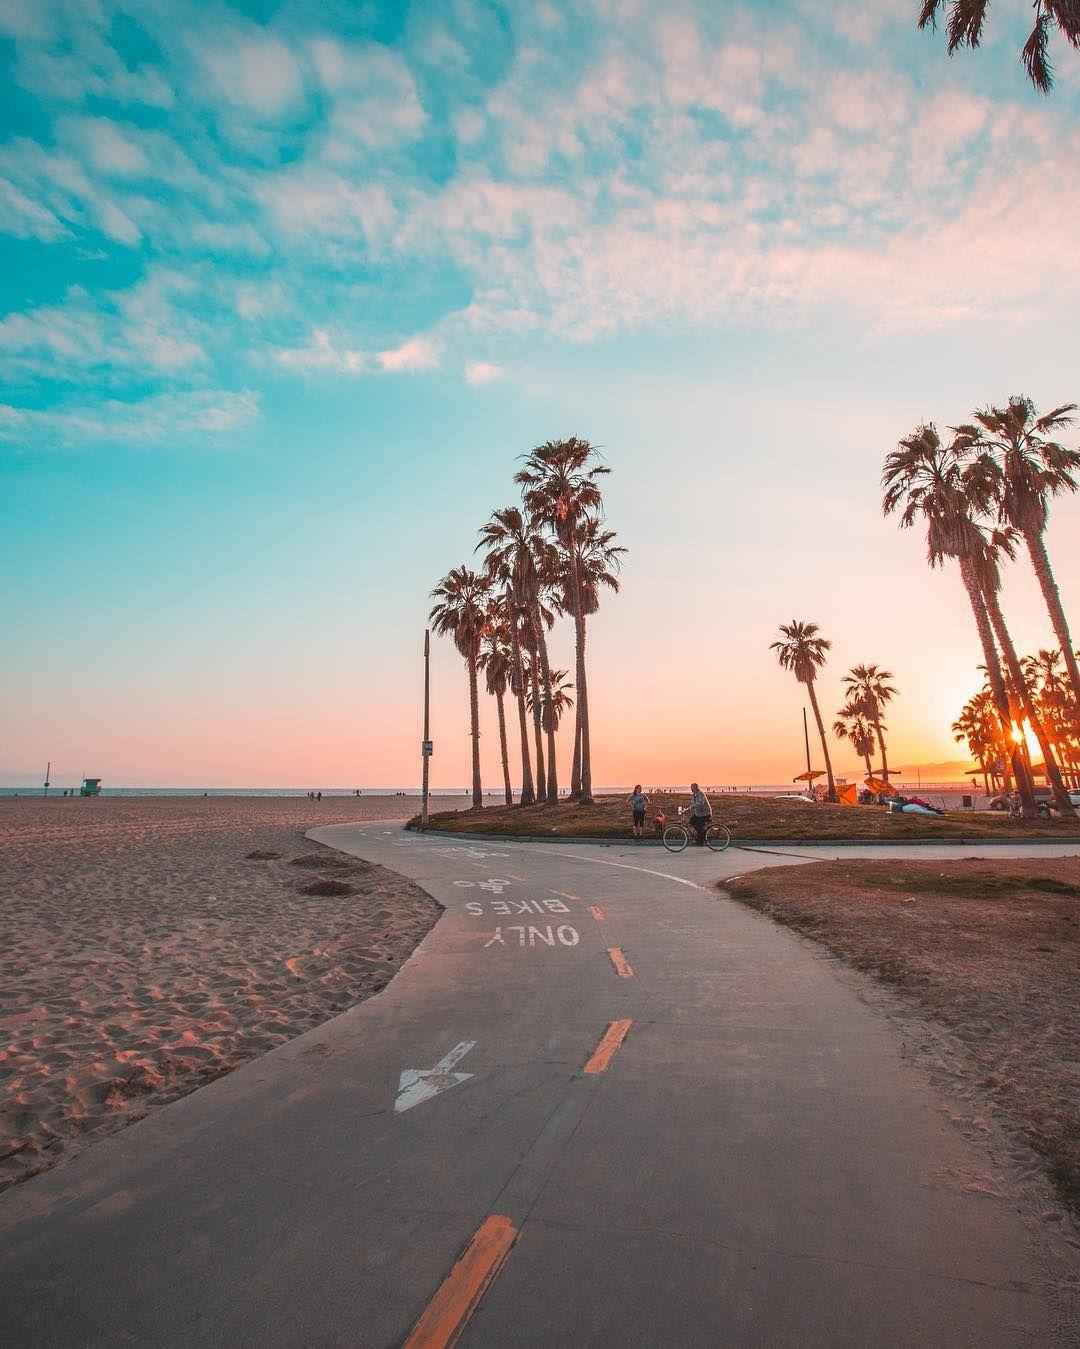 Walking around Venice Beach, Los Angeles, California